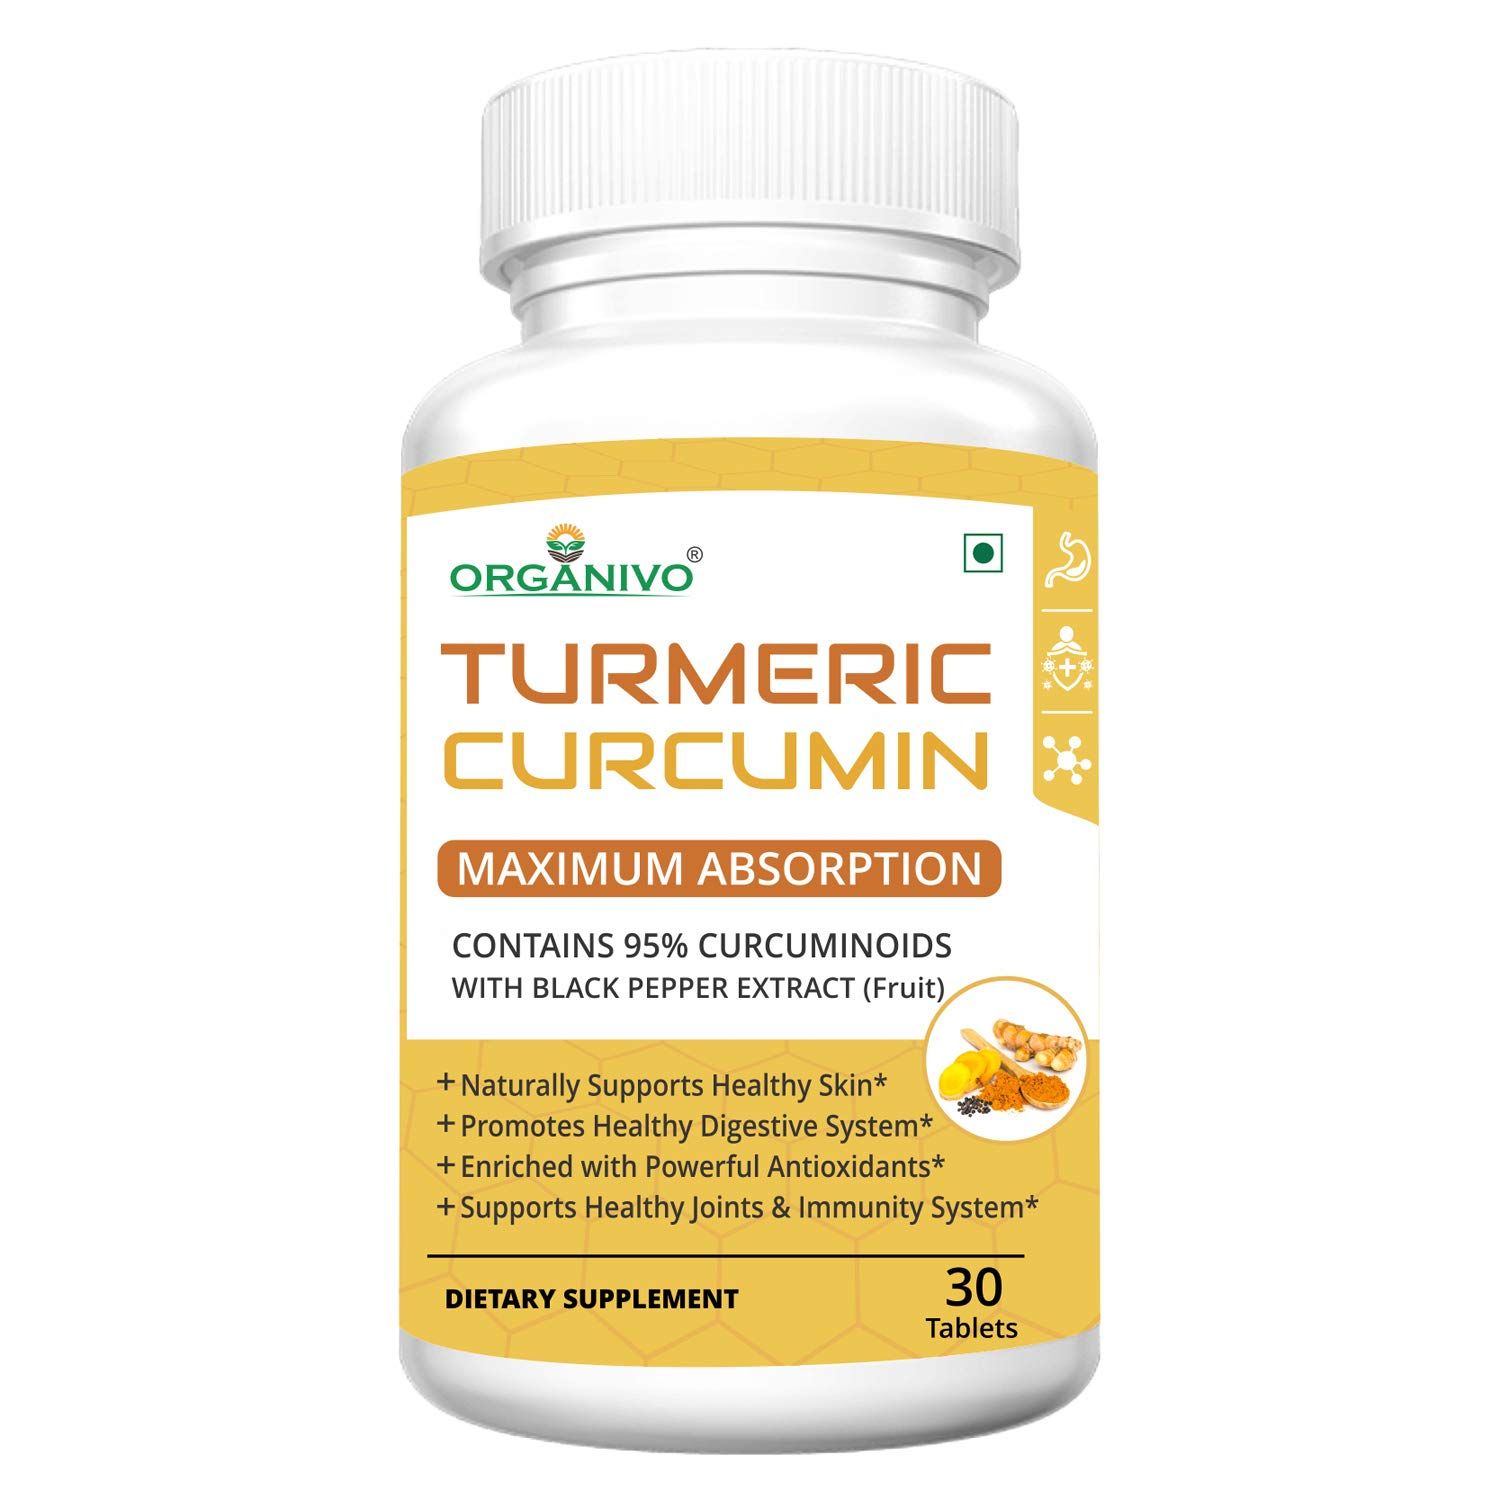 Organivo Premium Turmeric Curcumin With Black Pepper Extract Tablets Image